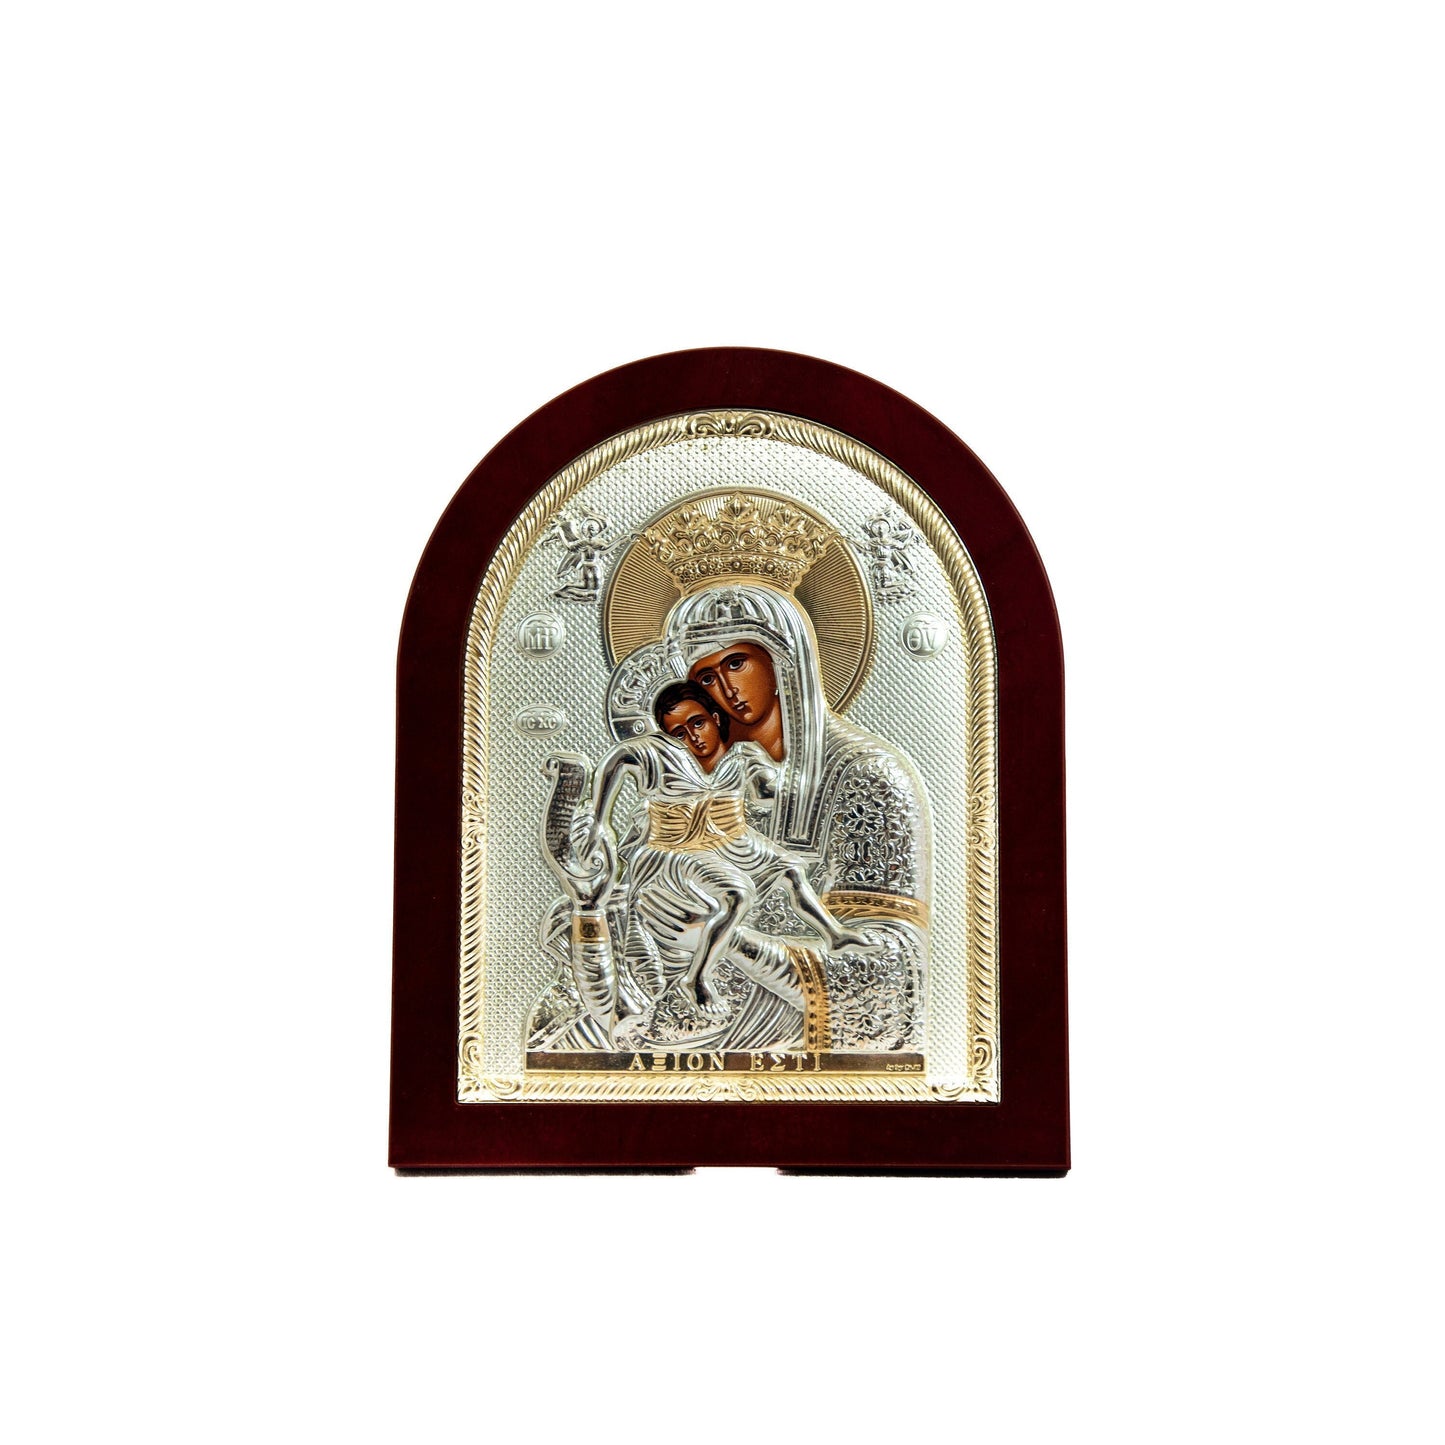 Virgin Mary icon Axion Esti, Handmade Silver Greek Orthodox Icon, Mother of God Byzantine art, Theotokos handmade wall hanging wood plaque TheHolyArt